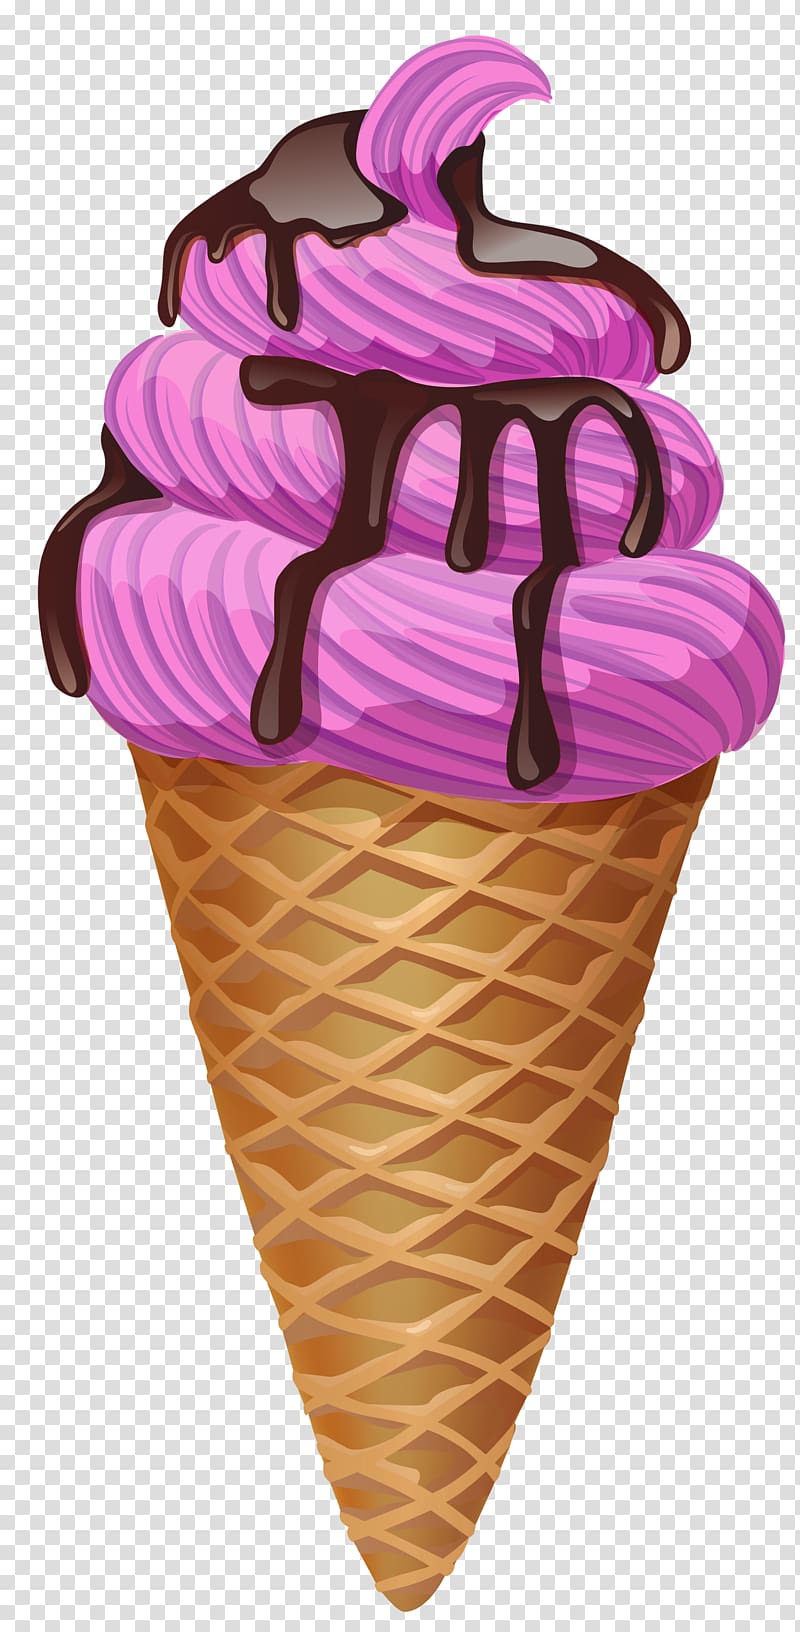 soft serve ice cream , Ice cream cone Chocolate ice cream Sundae, Pink Ice Cream Cone transparent background PNG clipart